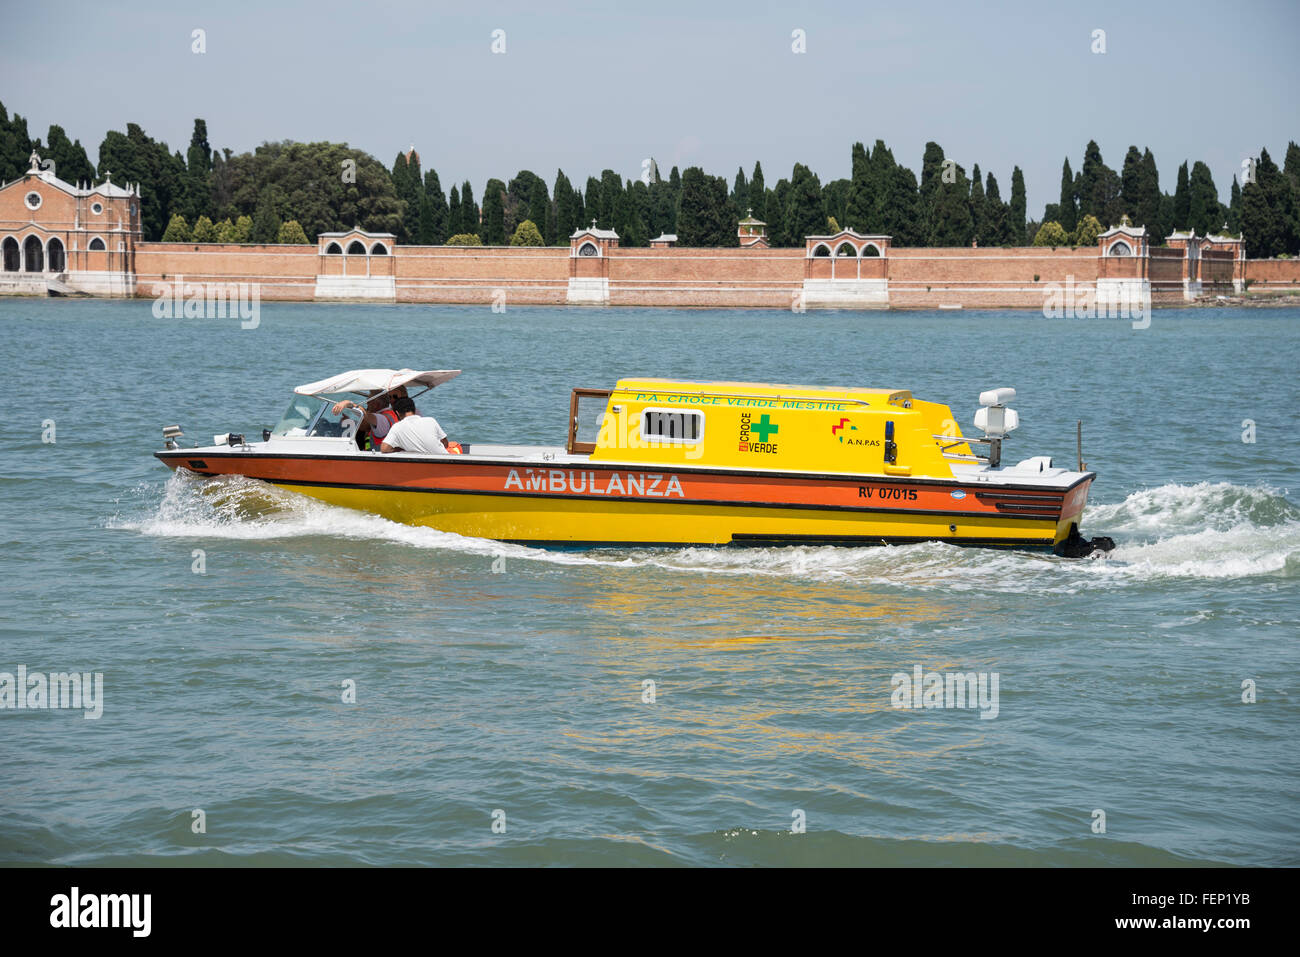 An ambulance boat in Venice, Italy Stock Photo